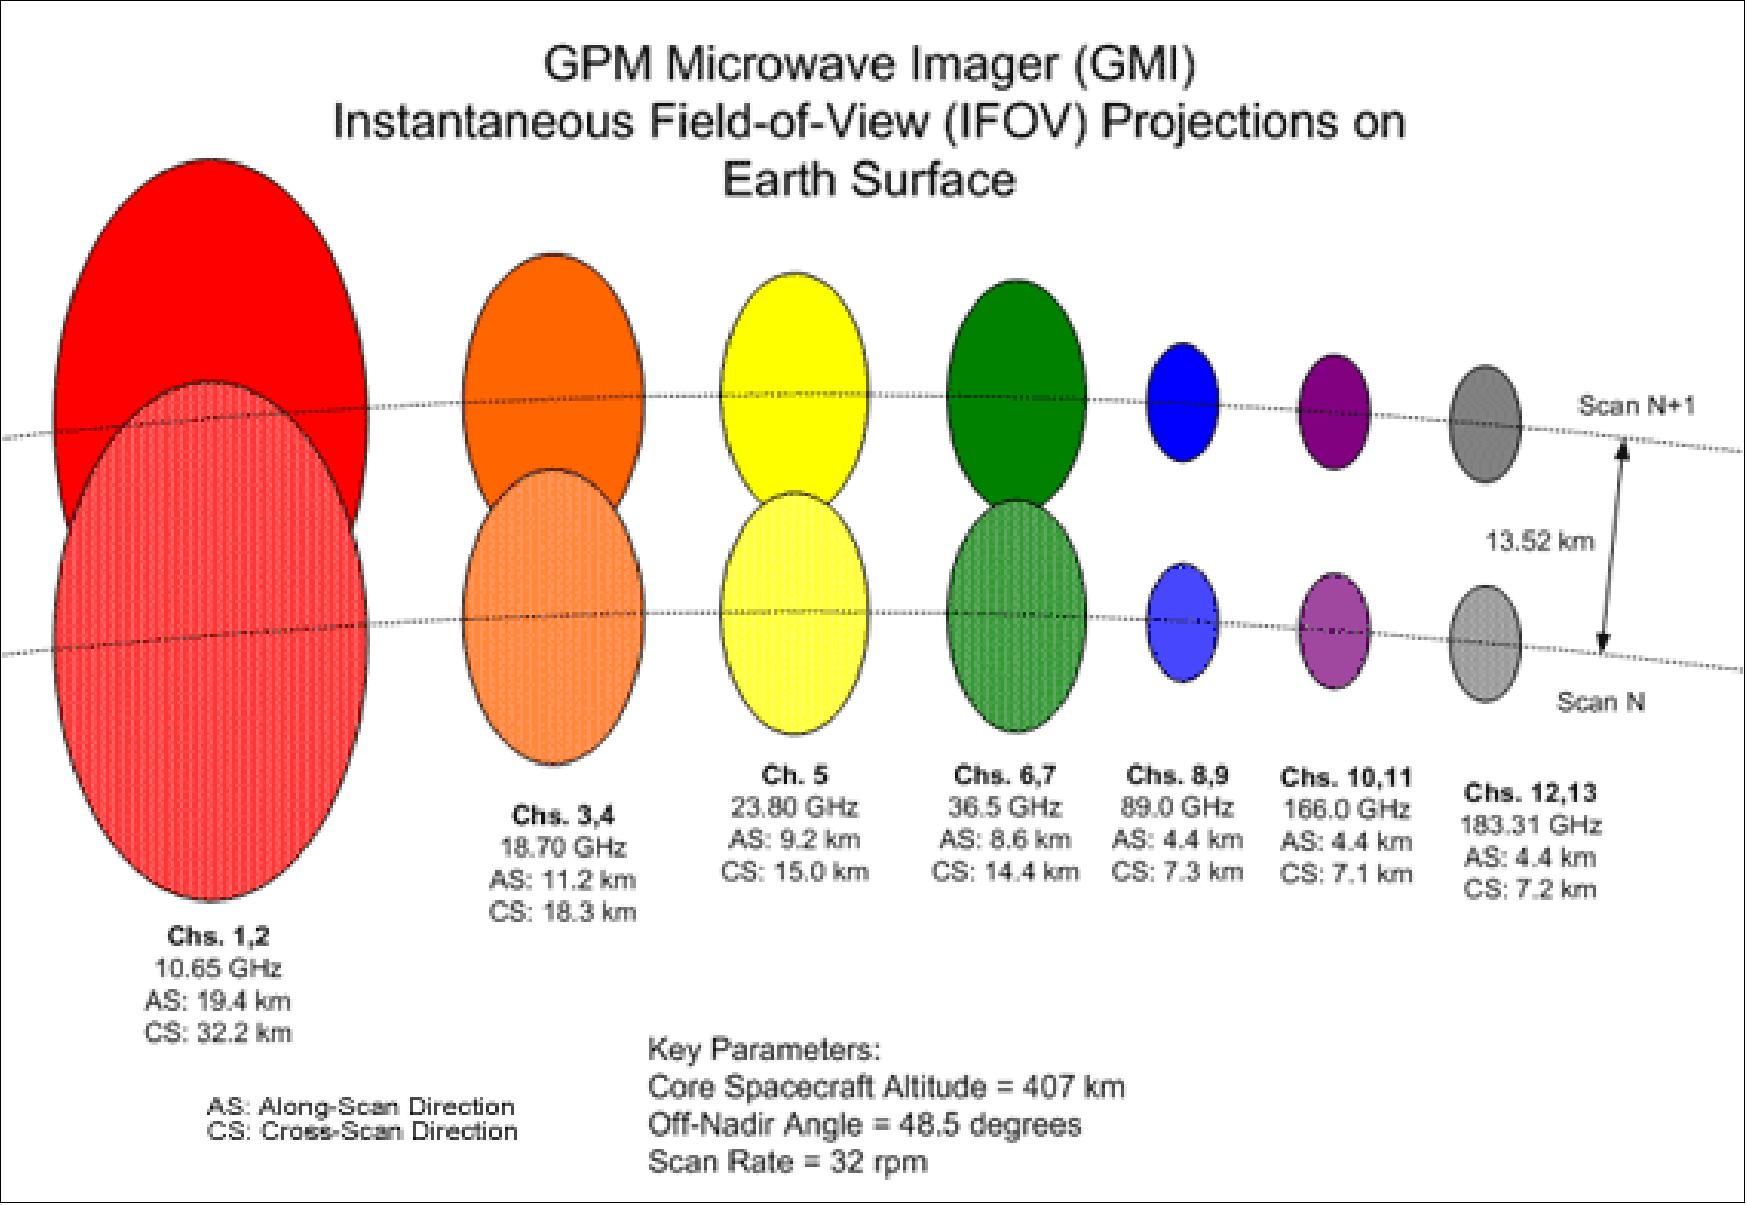 Figure 75: Channel footprint scheme of GMI in successive along-sans (image credit: NASA)